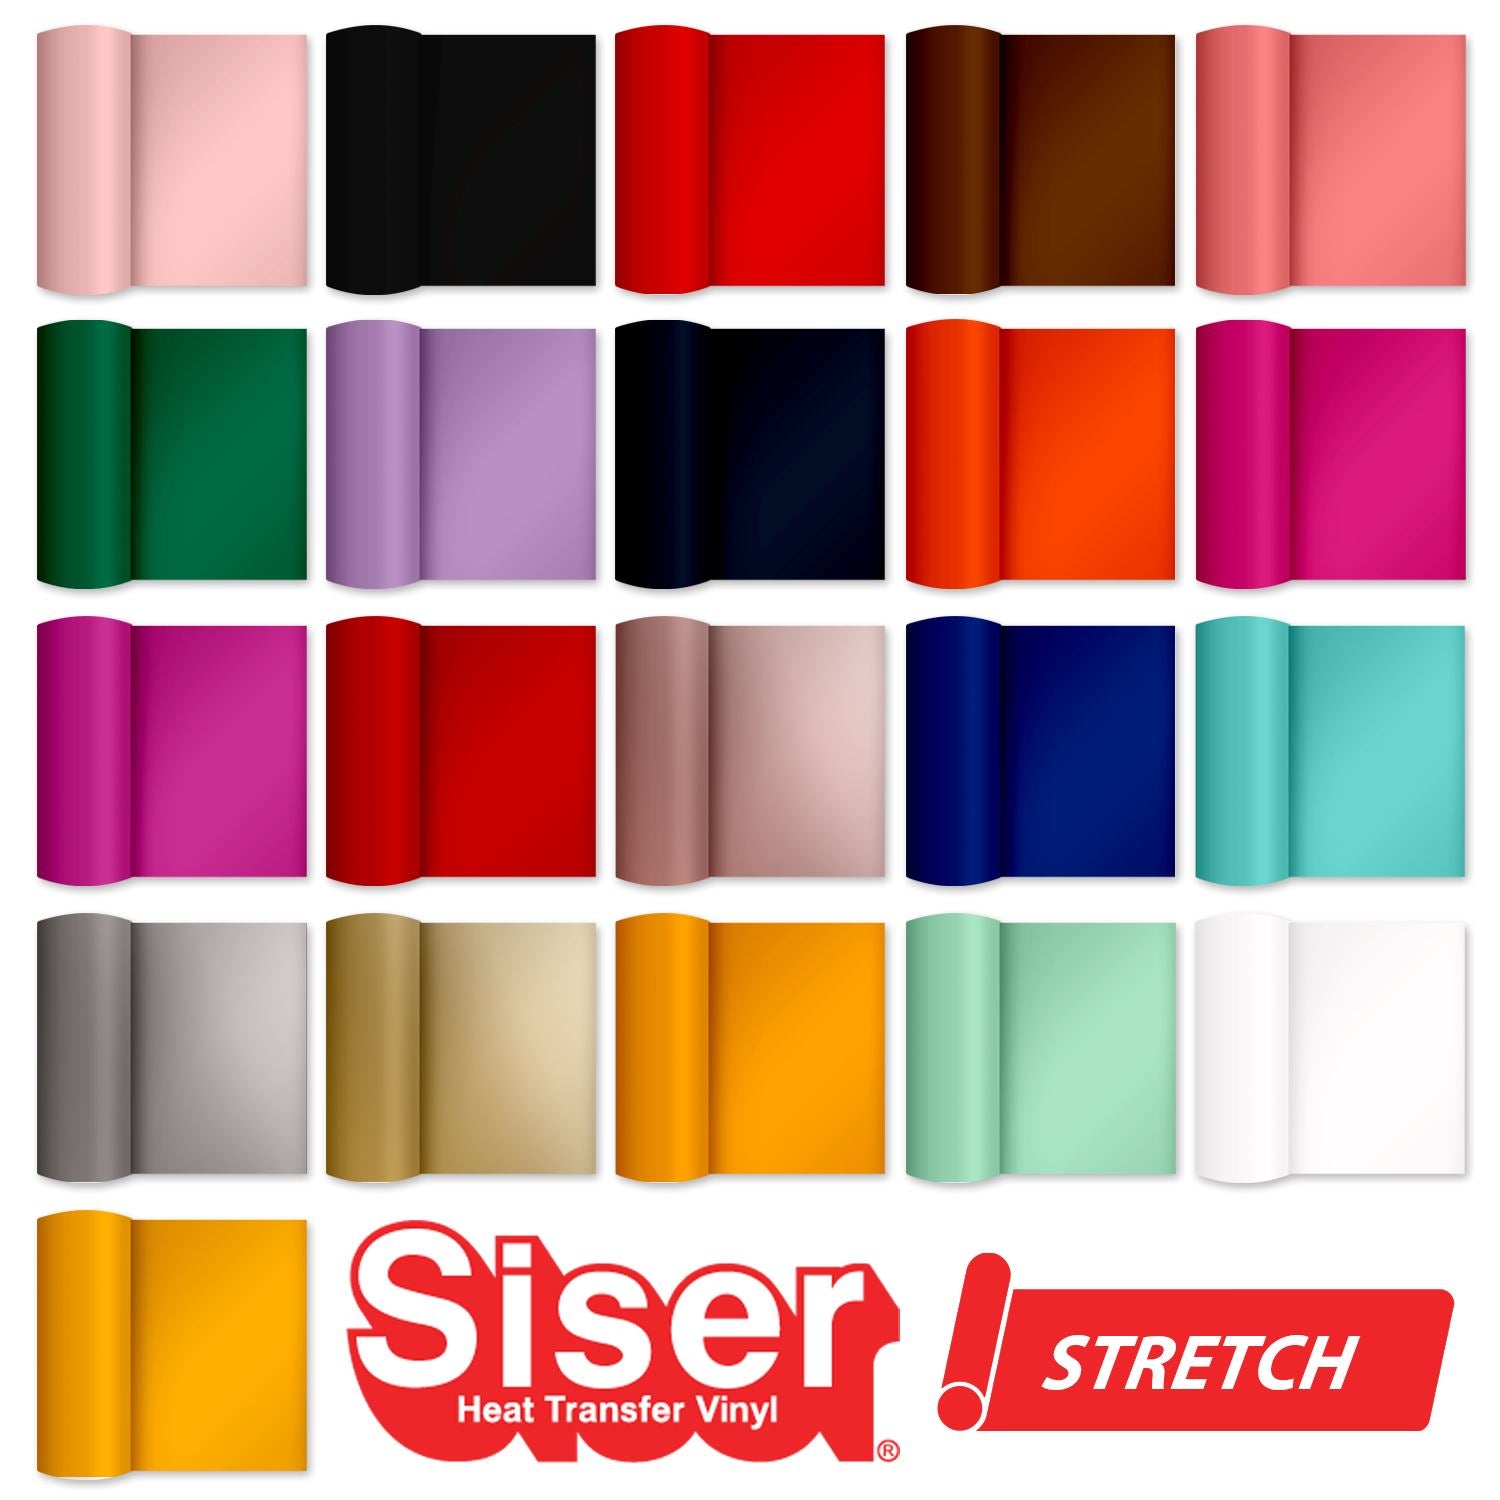 SISER EASYWEED Heat Transfer Vinyl Color Options Chart - JPG